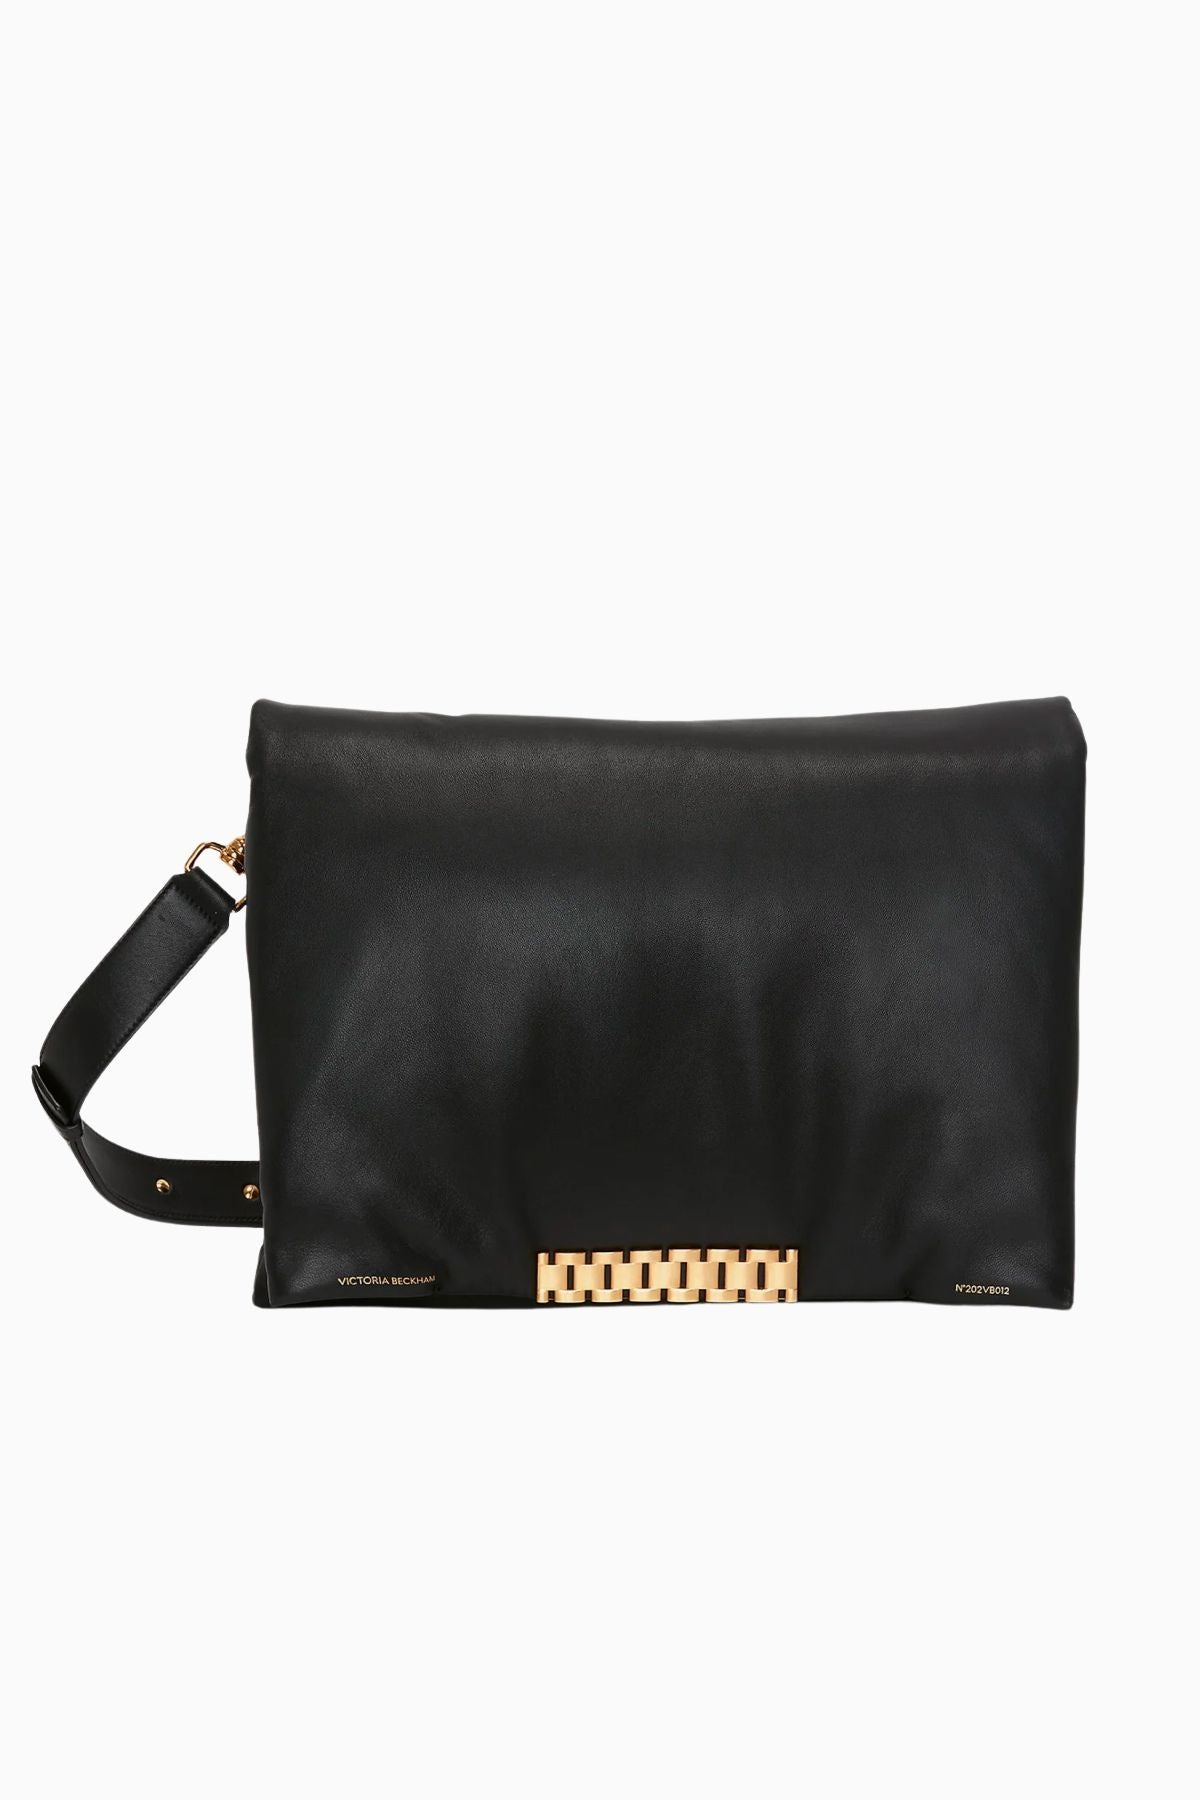 Michael Kors Small Women Leather Oval Crossbody Bag Handbag Shoulder Purse  Black | eBay